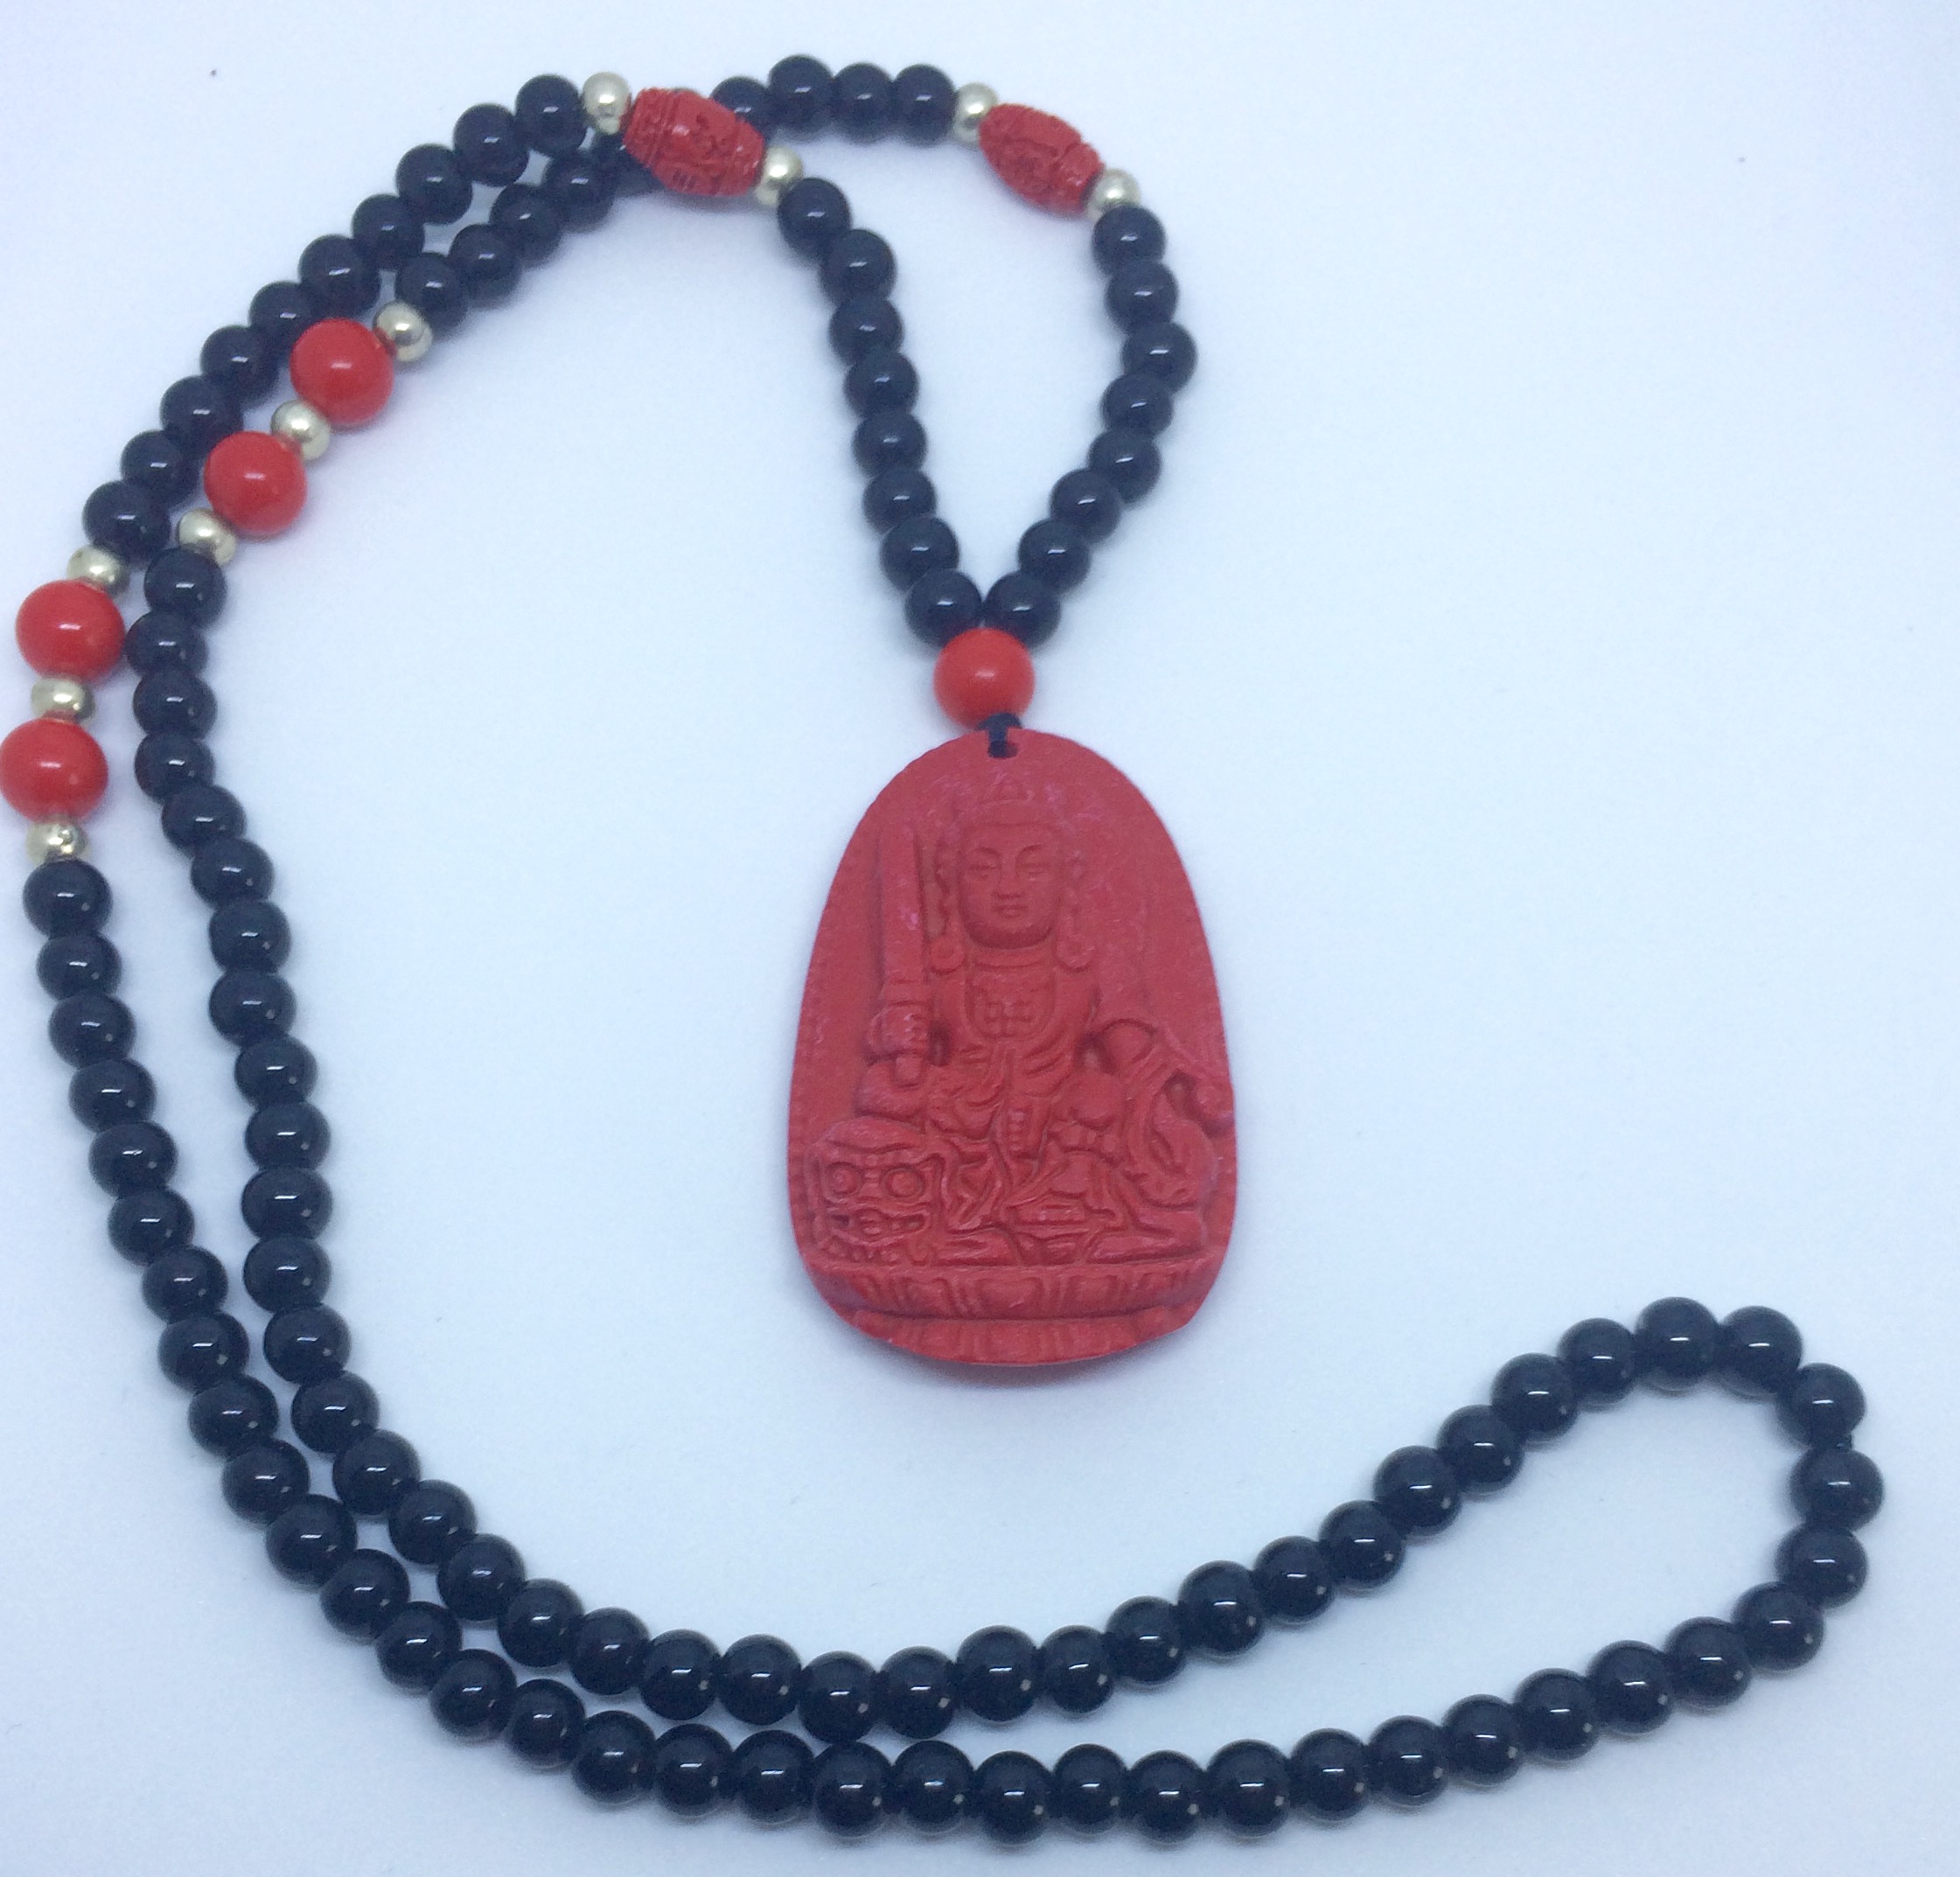 4.amulette-pendentif-cinabre-rouge-magie-bouddha-journaliste